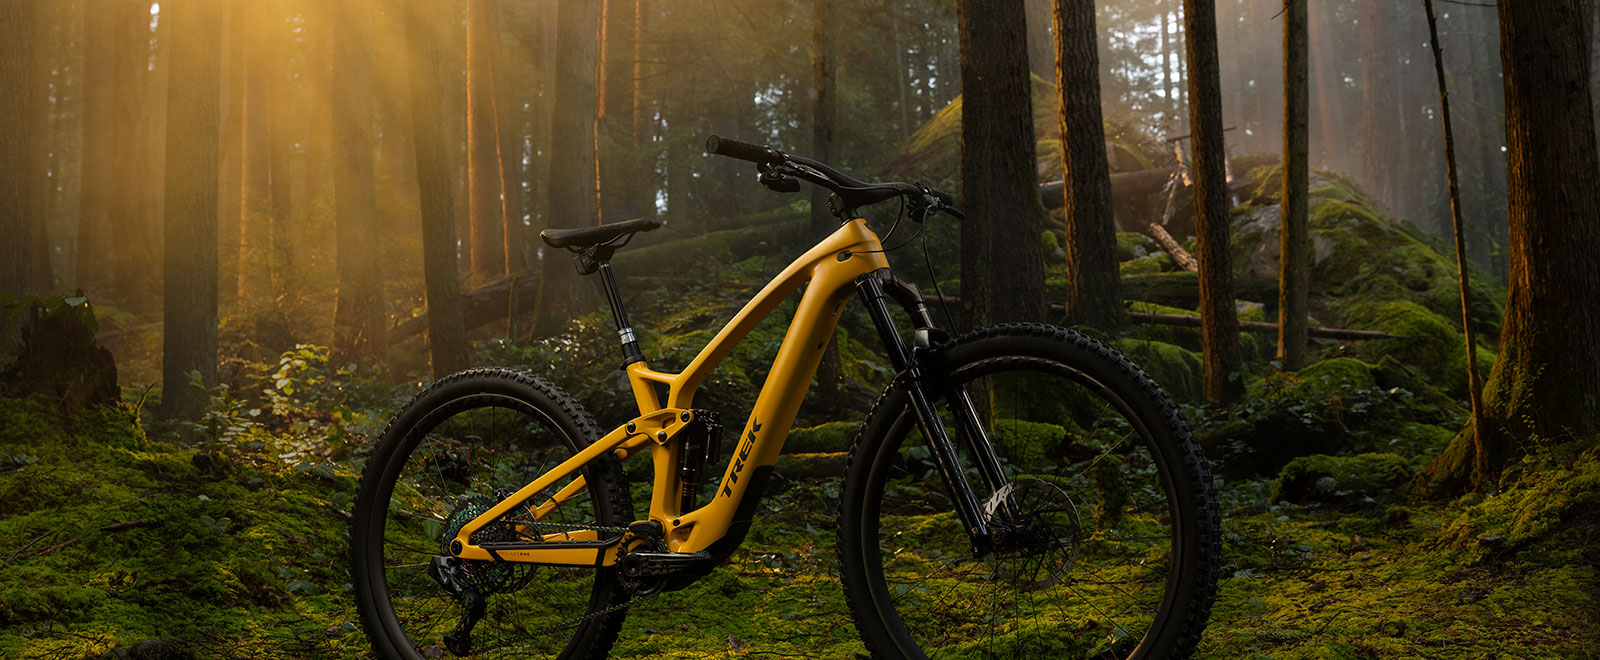 Yellow Trek Fuel Exe E-bike stands on green mossy forest floor